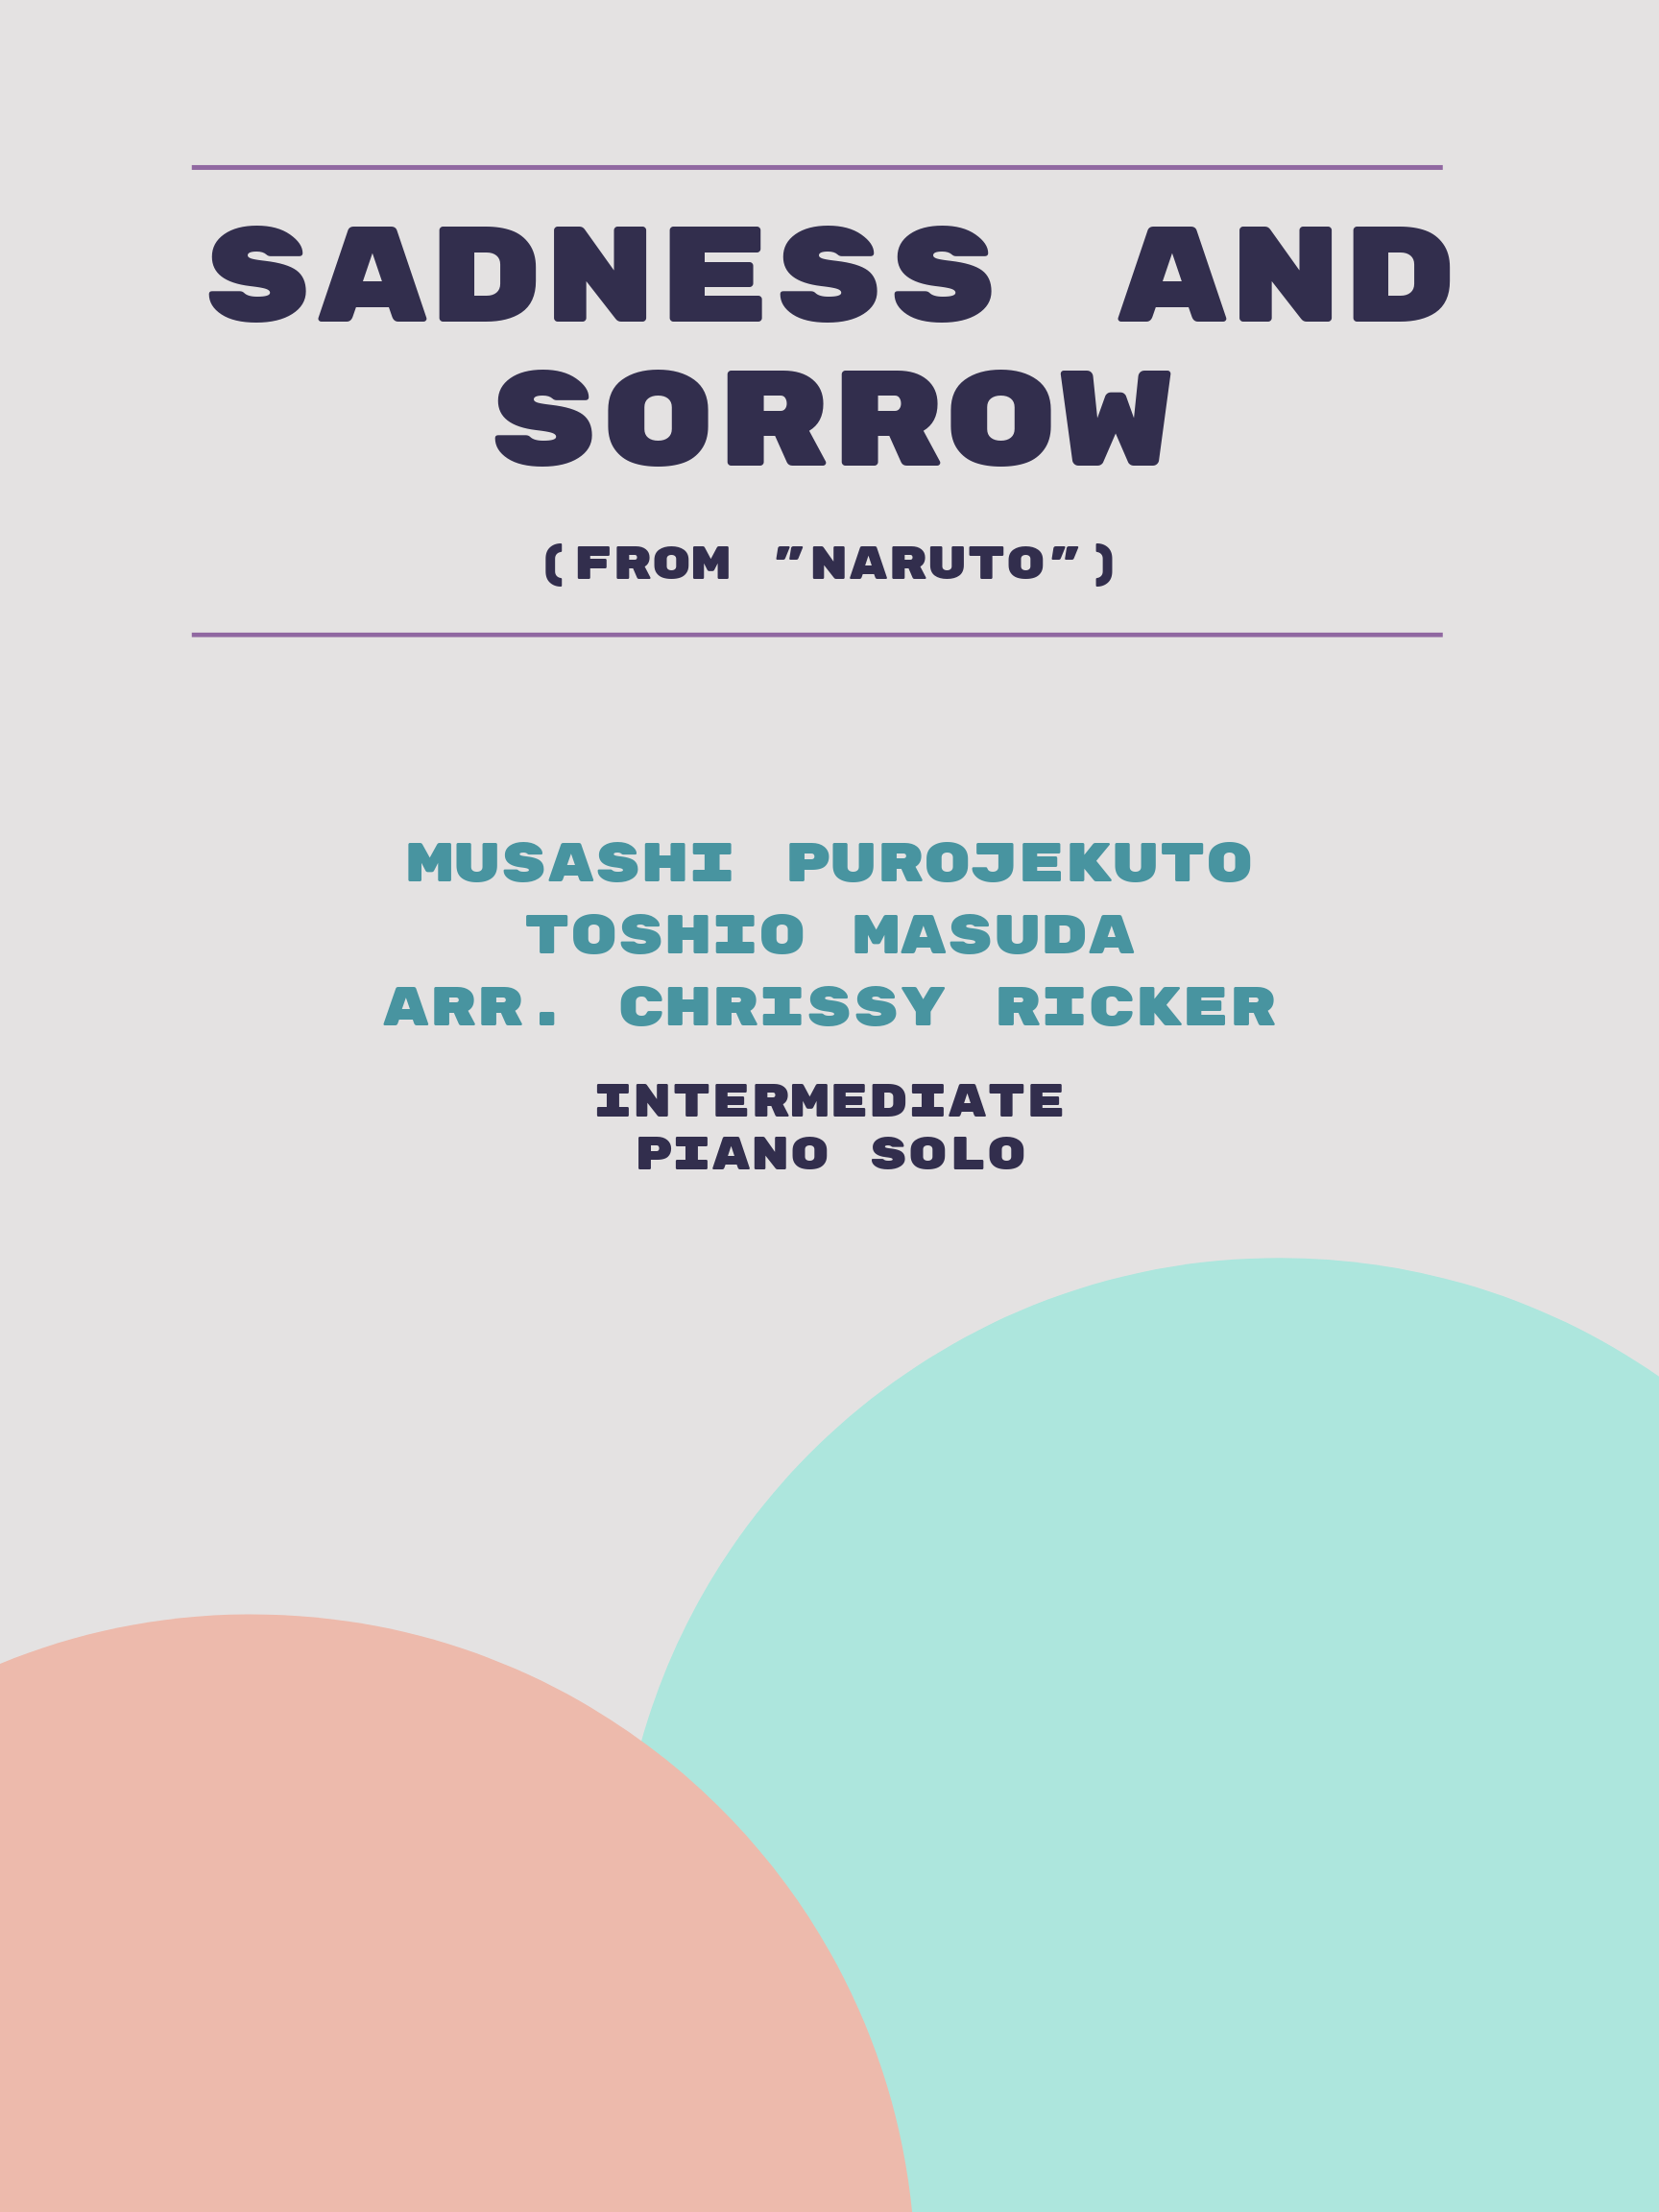 Sadness and Sorrow by Musashi Purojekuto, Toshio Masuda